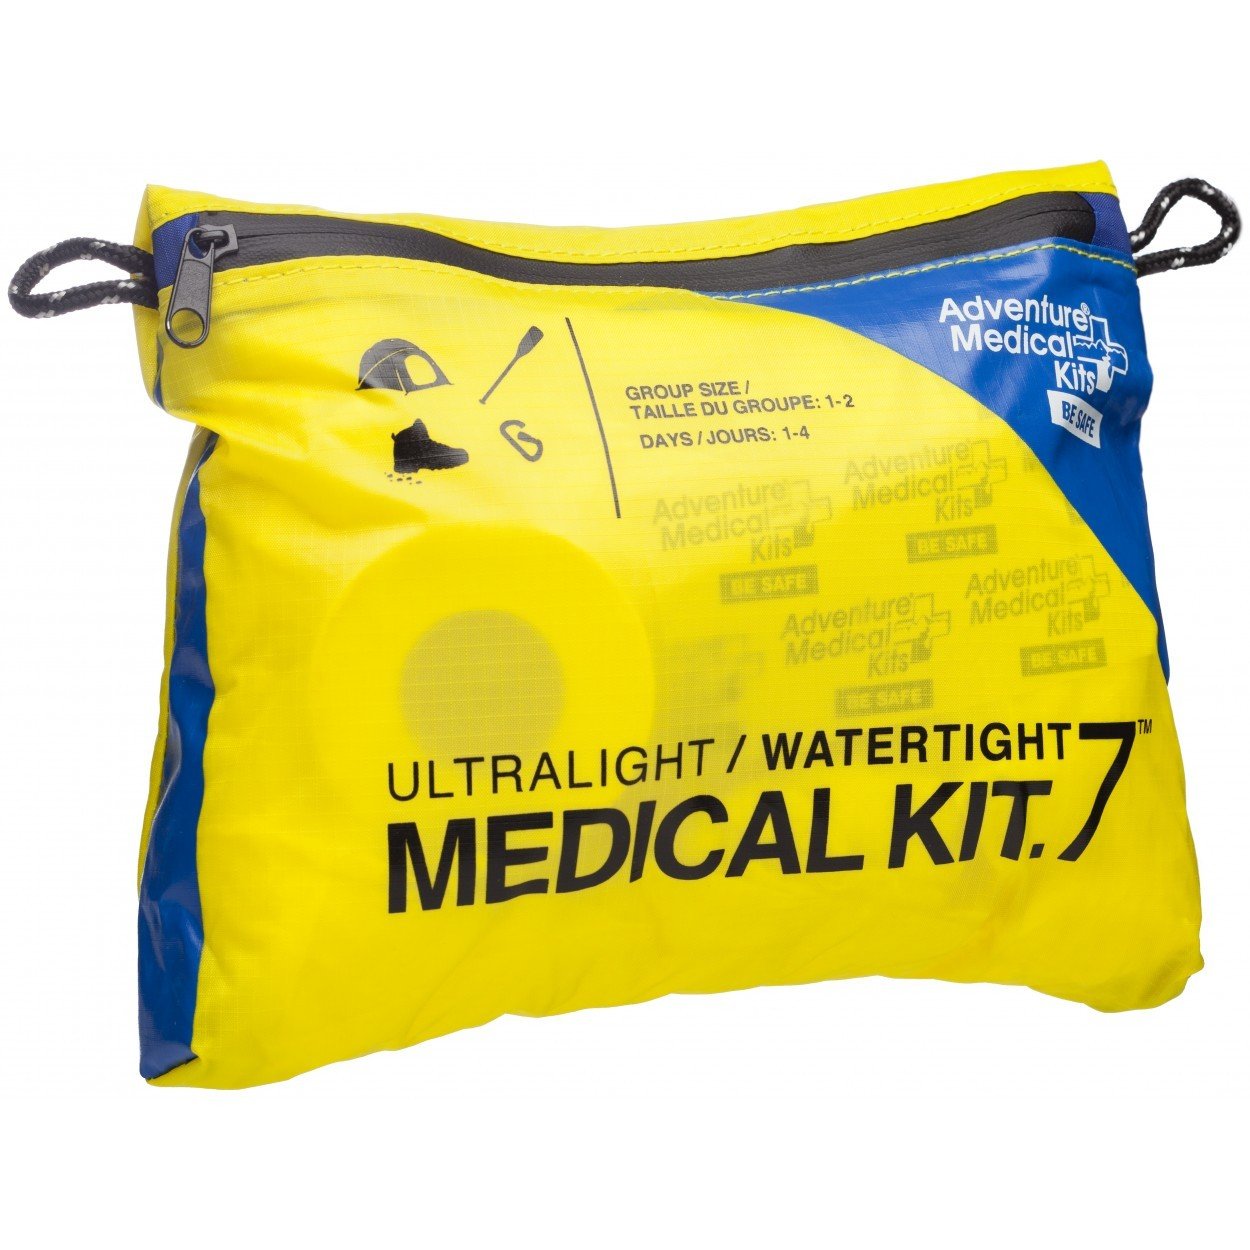 Adventure Medical Kit Ultralight & Watertight .7